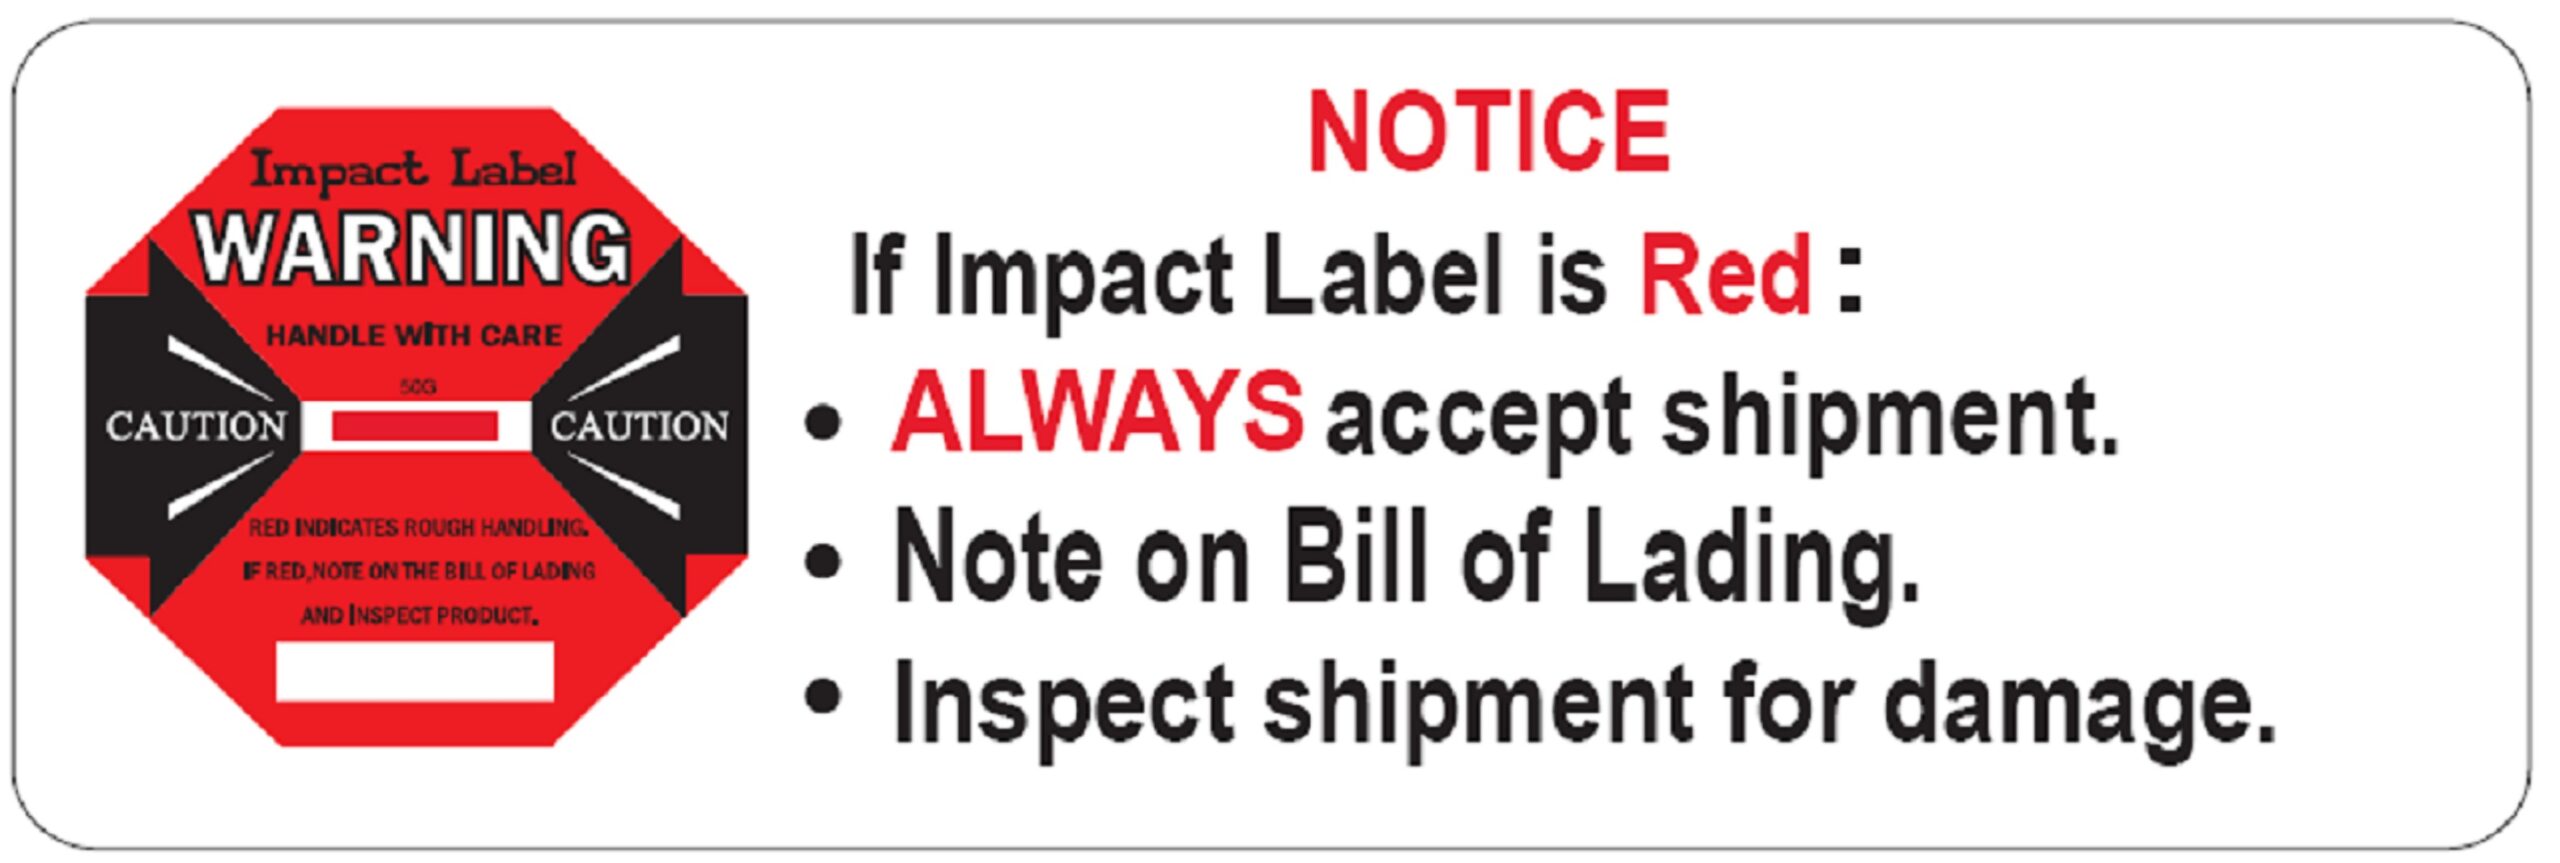 Impact Label Alert Sticker scaled